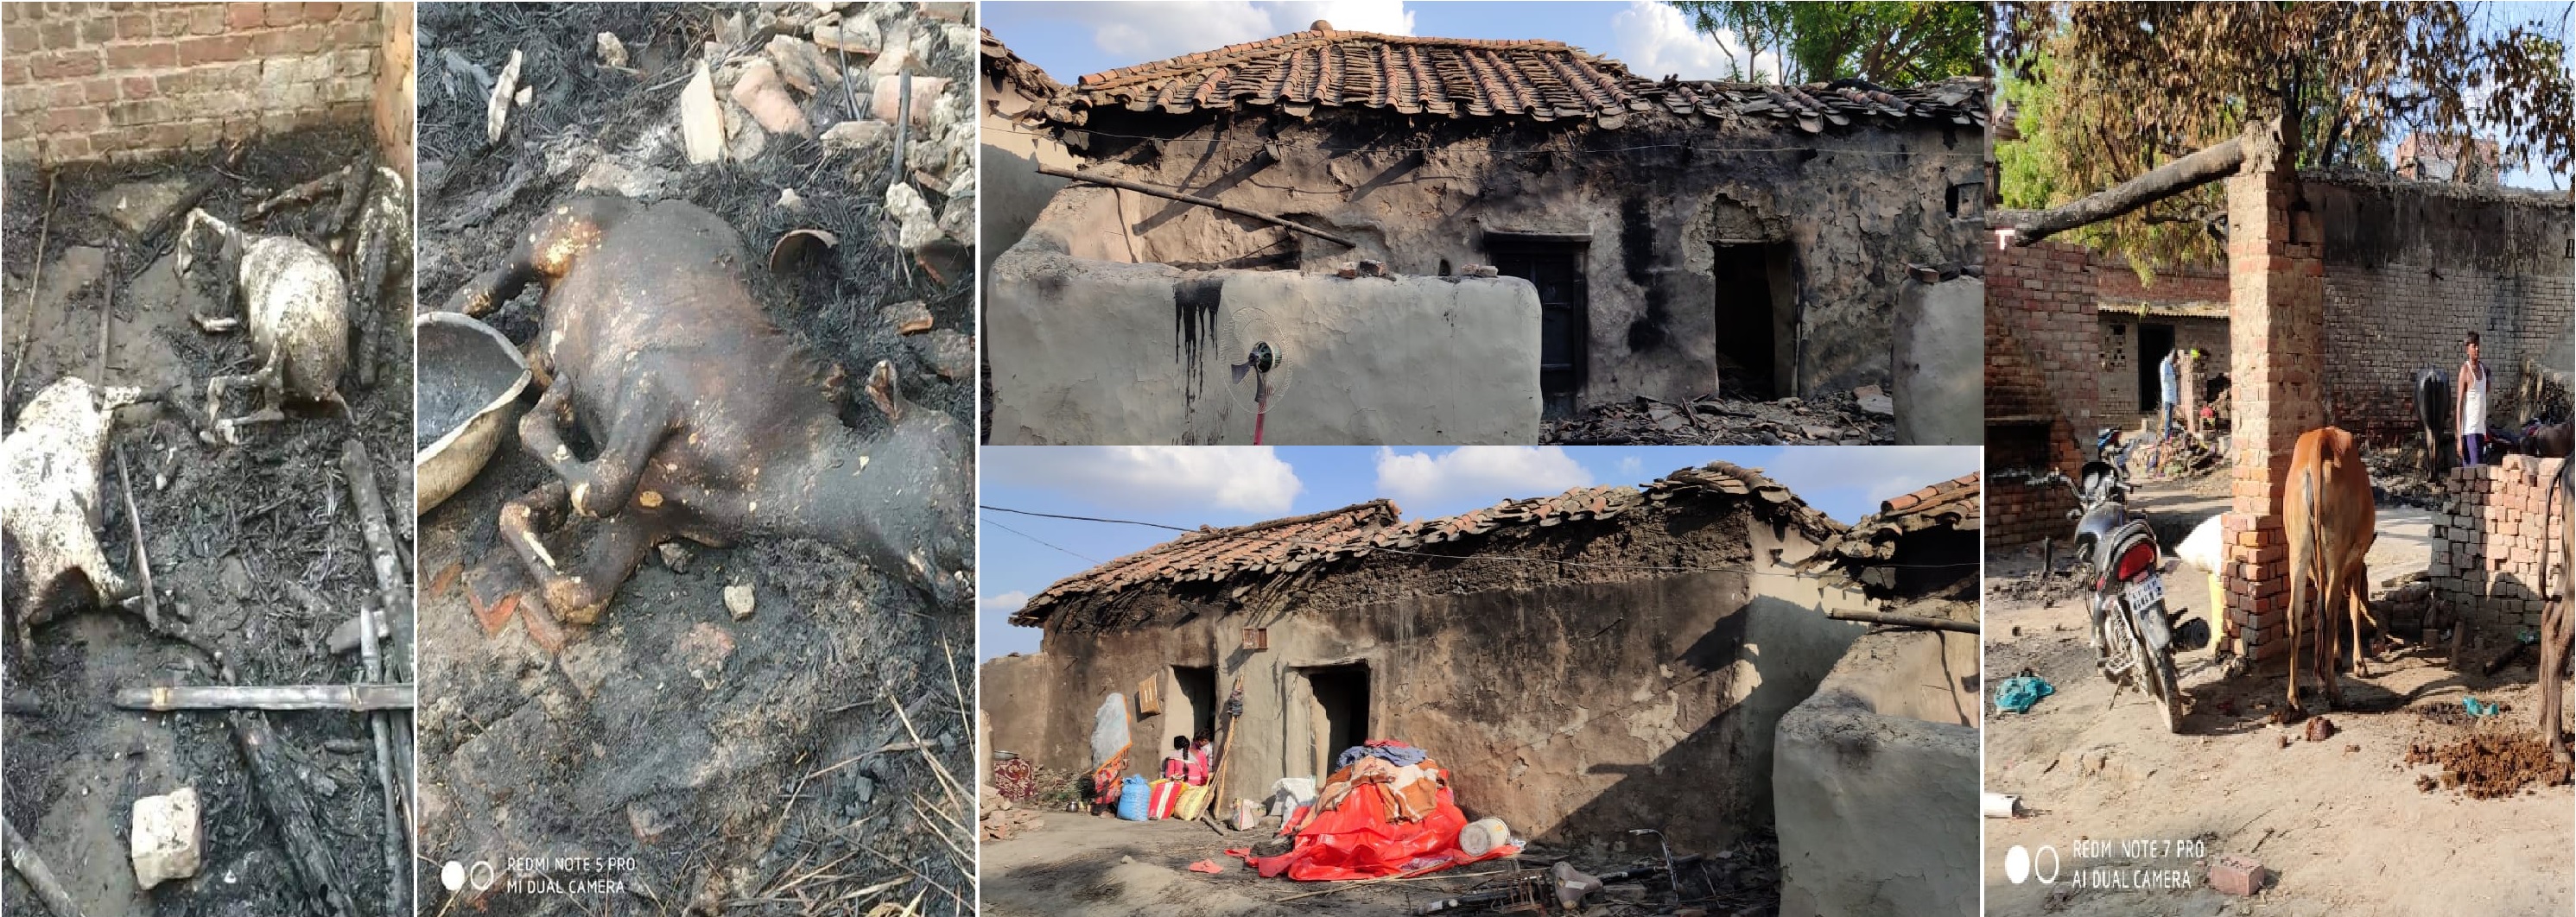 Jaunpur Dalit Colony burn